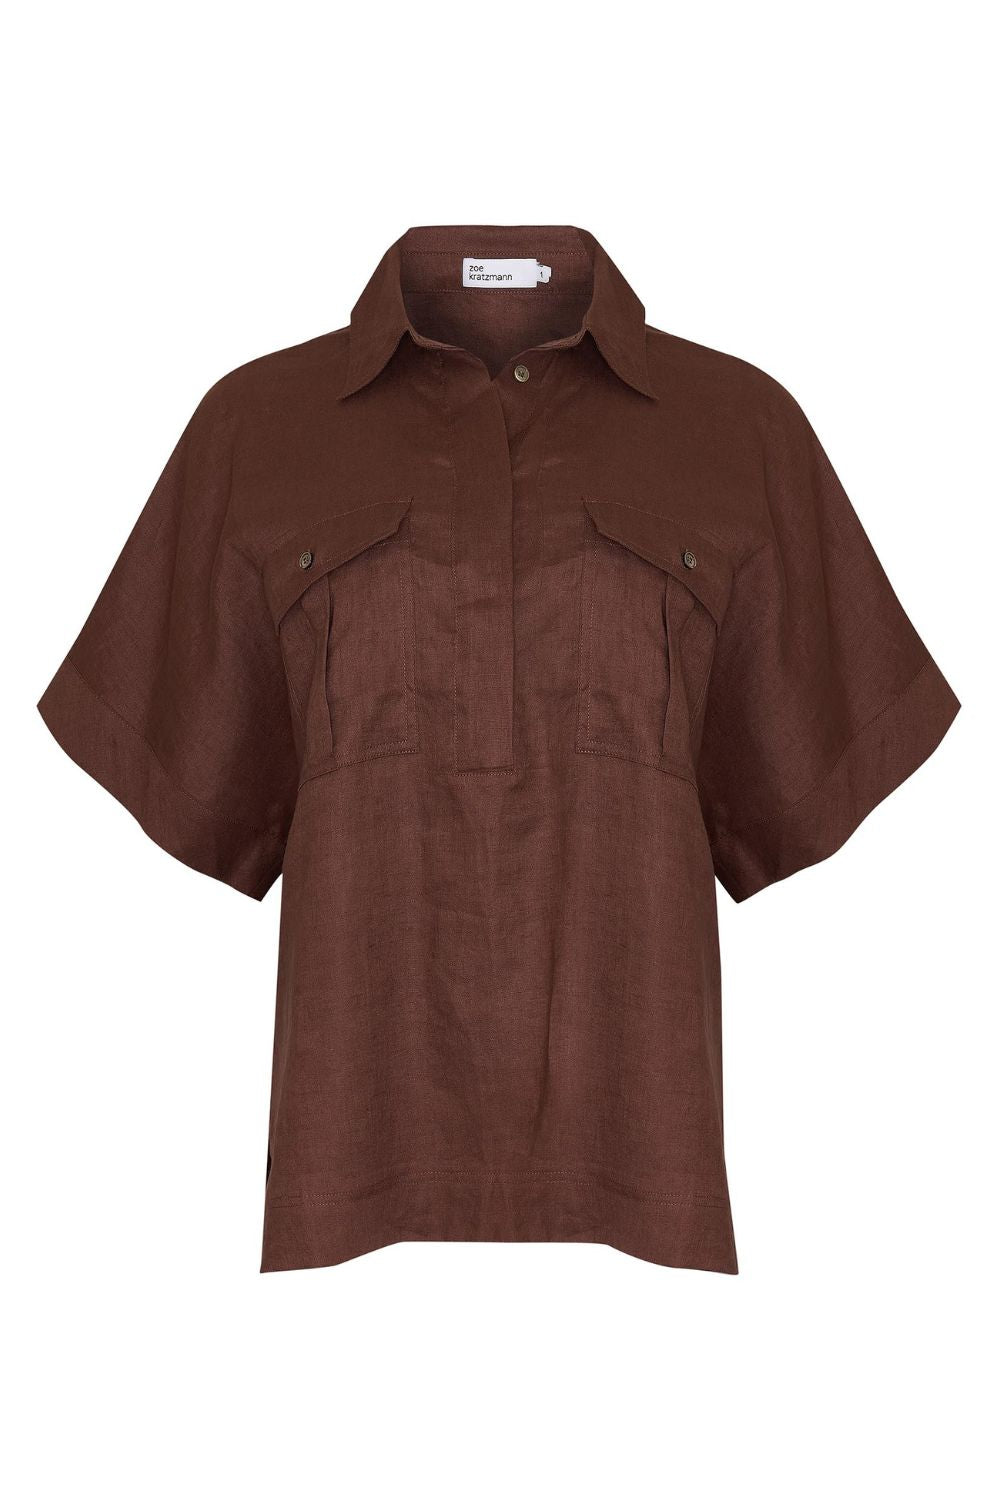 brown, shirt, oversized pockets, short sleeve, linen,  product image